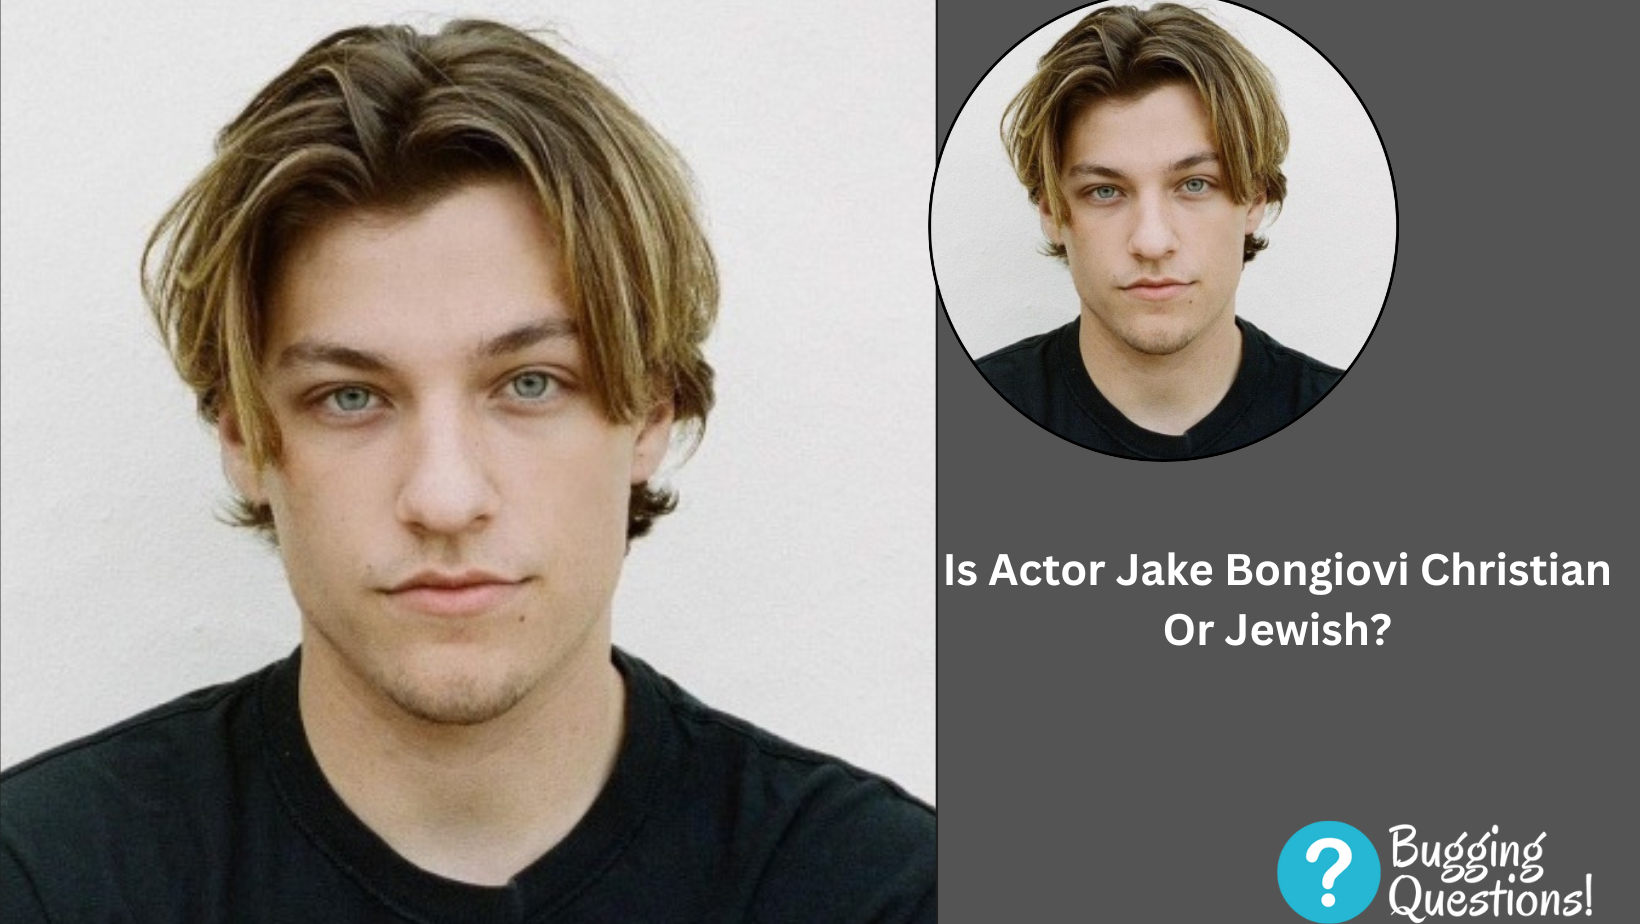 Is Actor Jake Bongiovi Christian Or Jewish?